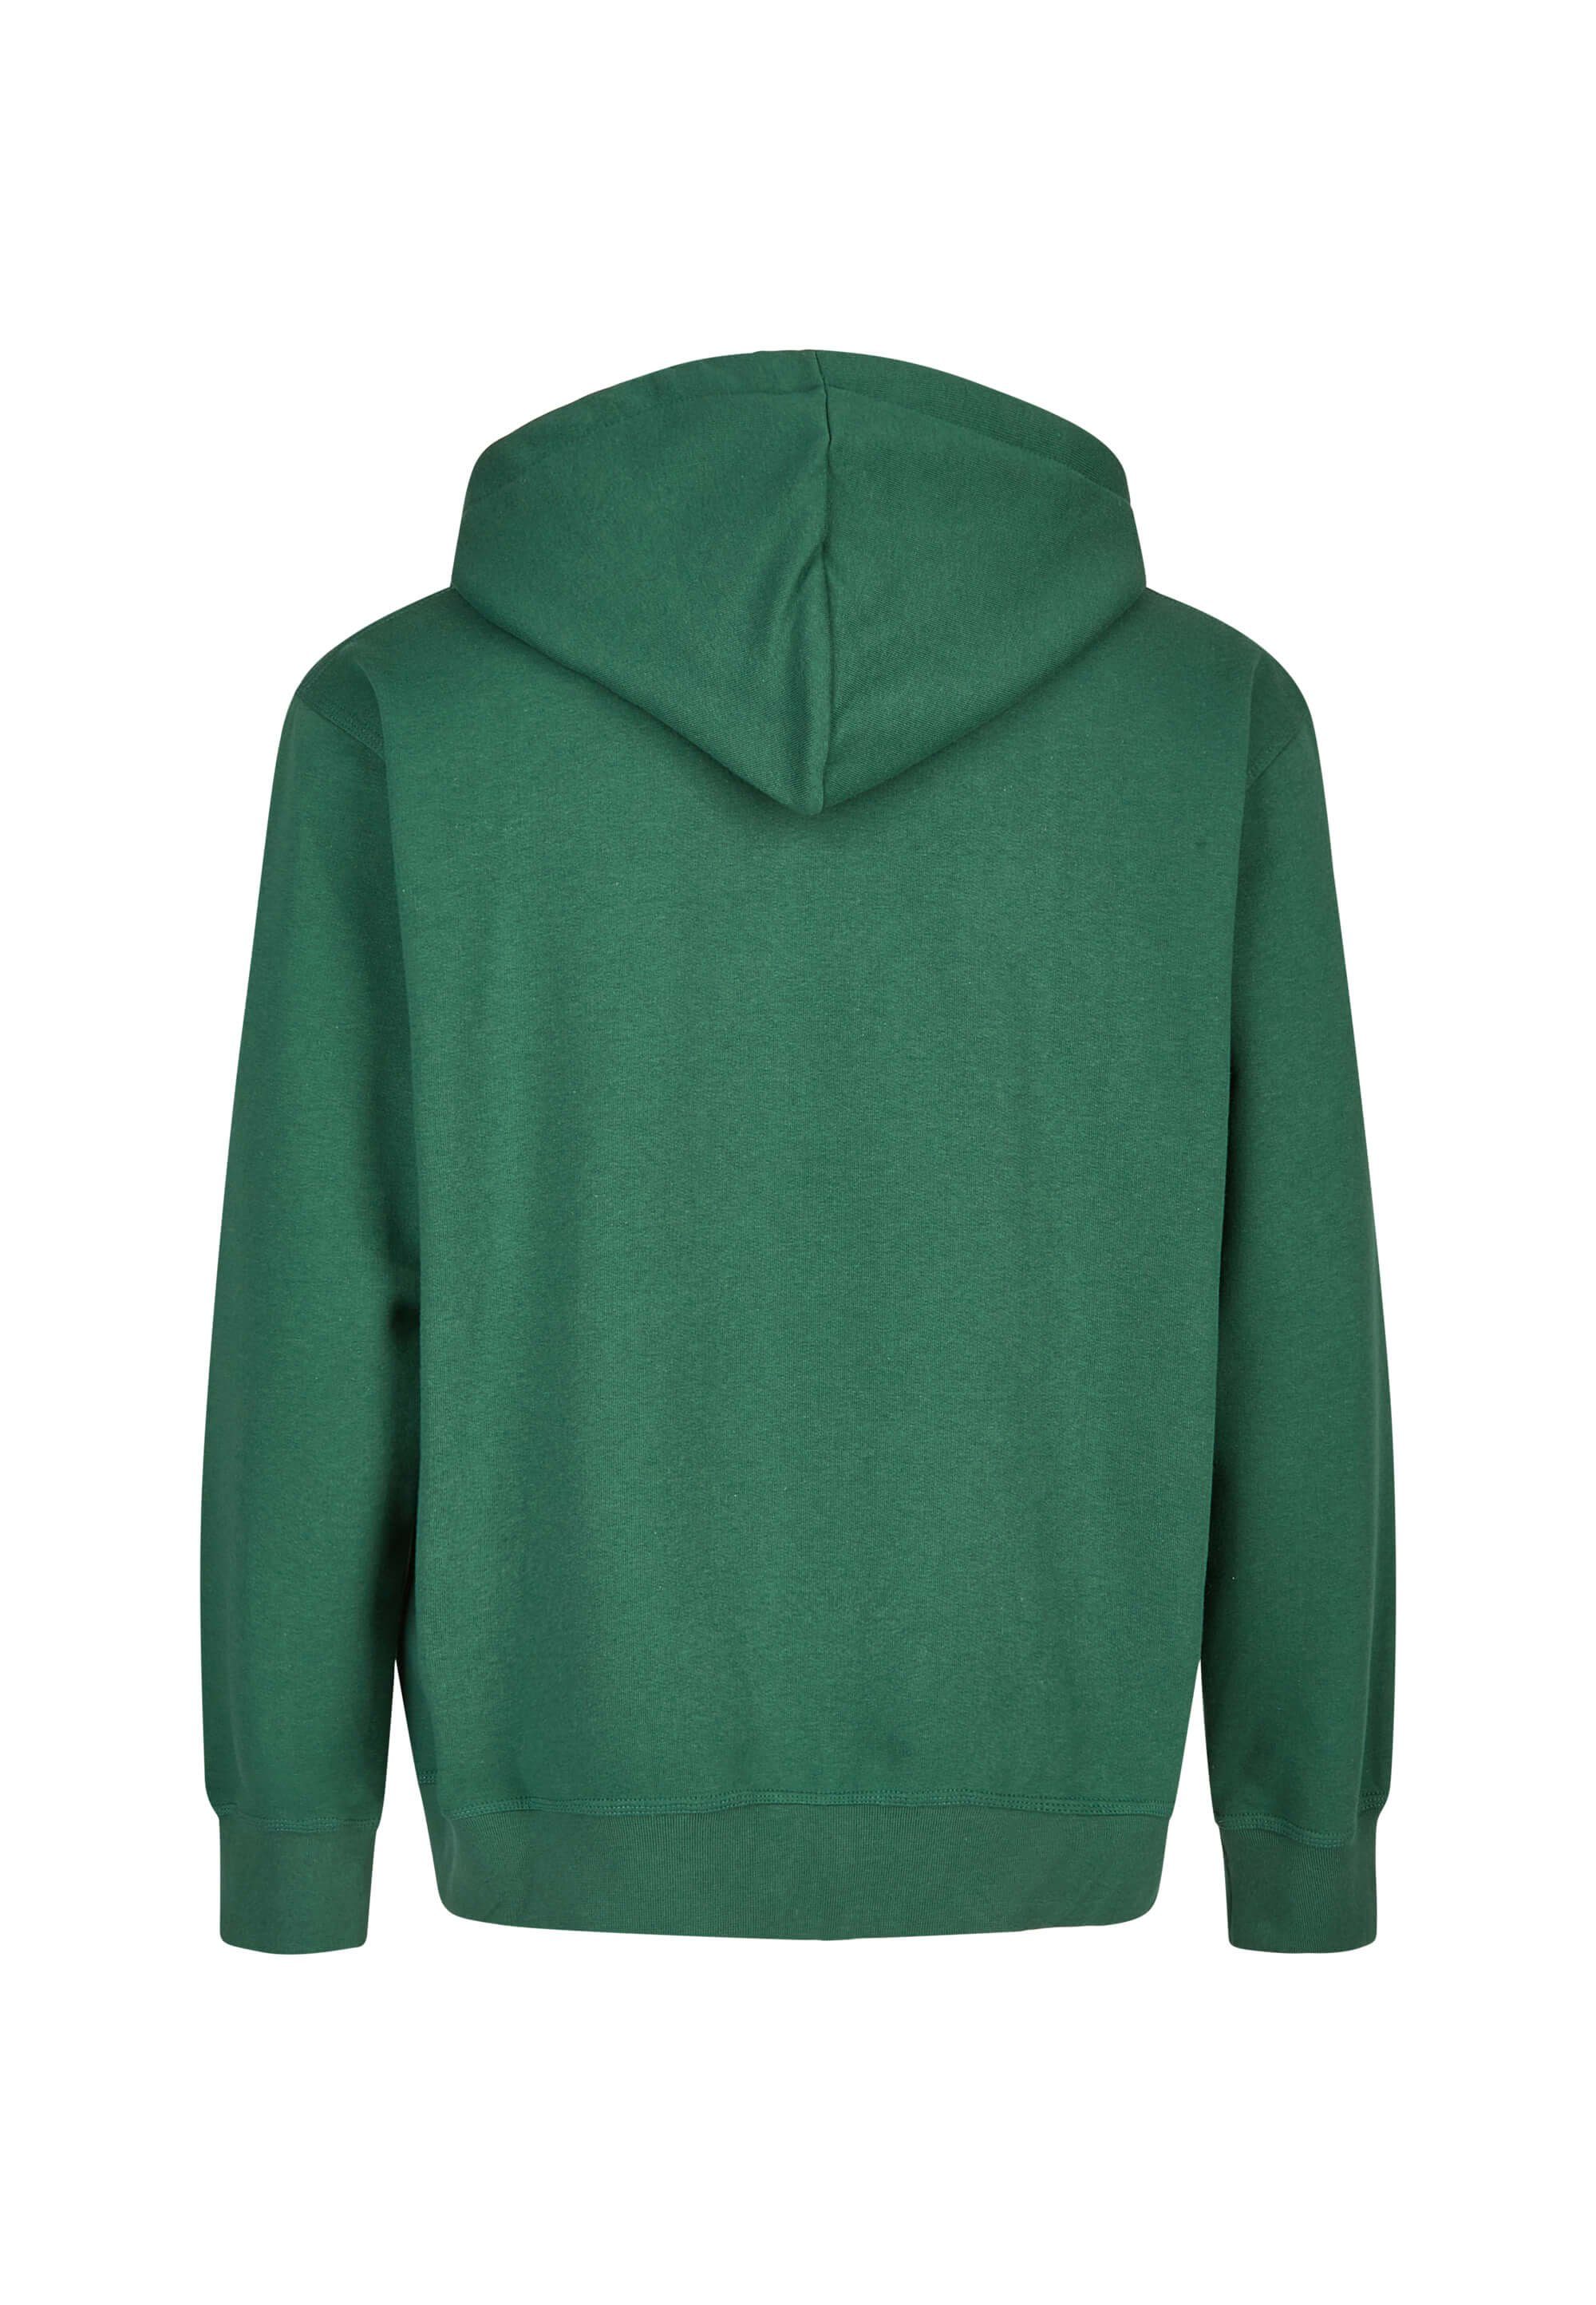 Smile Gull coolem mit Kapuzensweatshirt Print Cleptomanicx grün